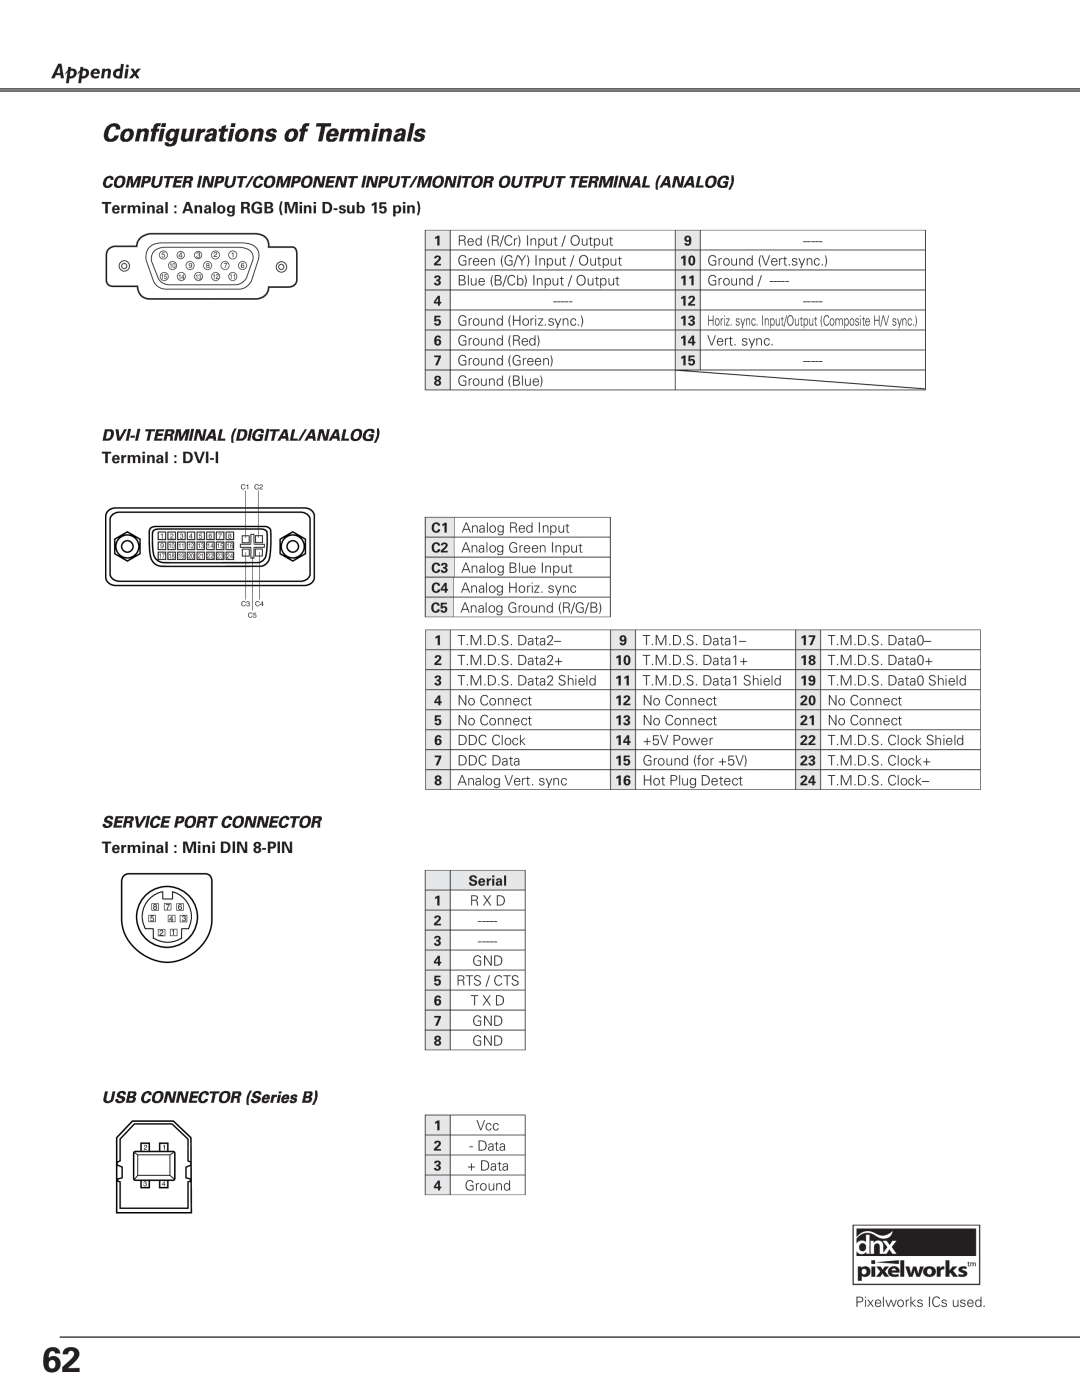 Sanyo PLC-SU51 Configurations of Terminals, Appendix, Computer Input/Component Input/Monitor Output Terminal Analog 